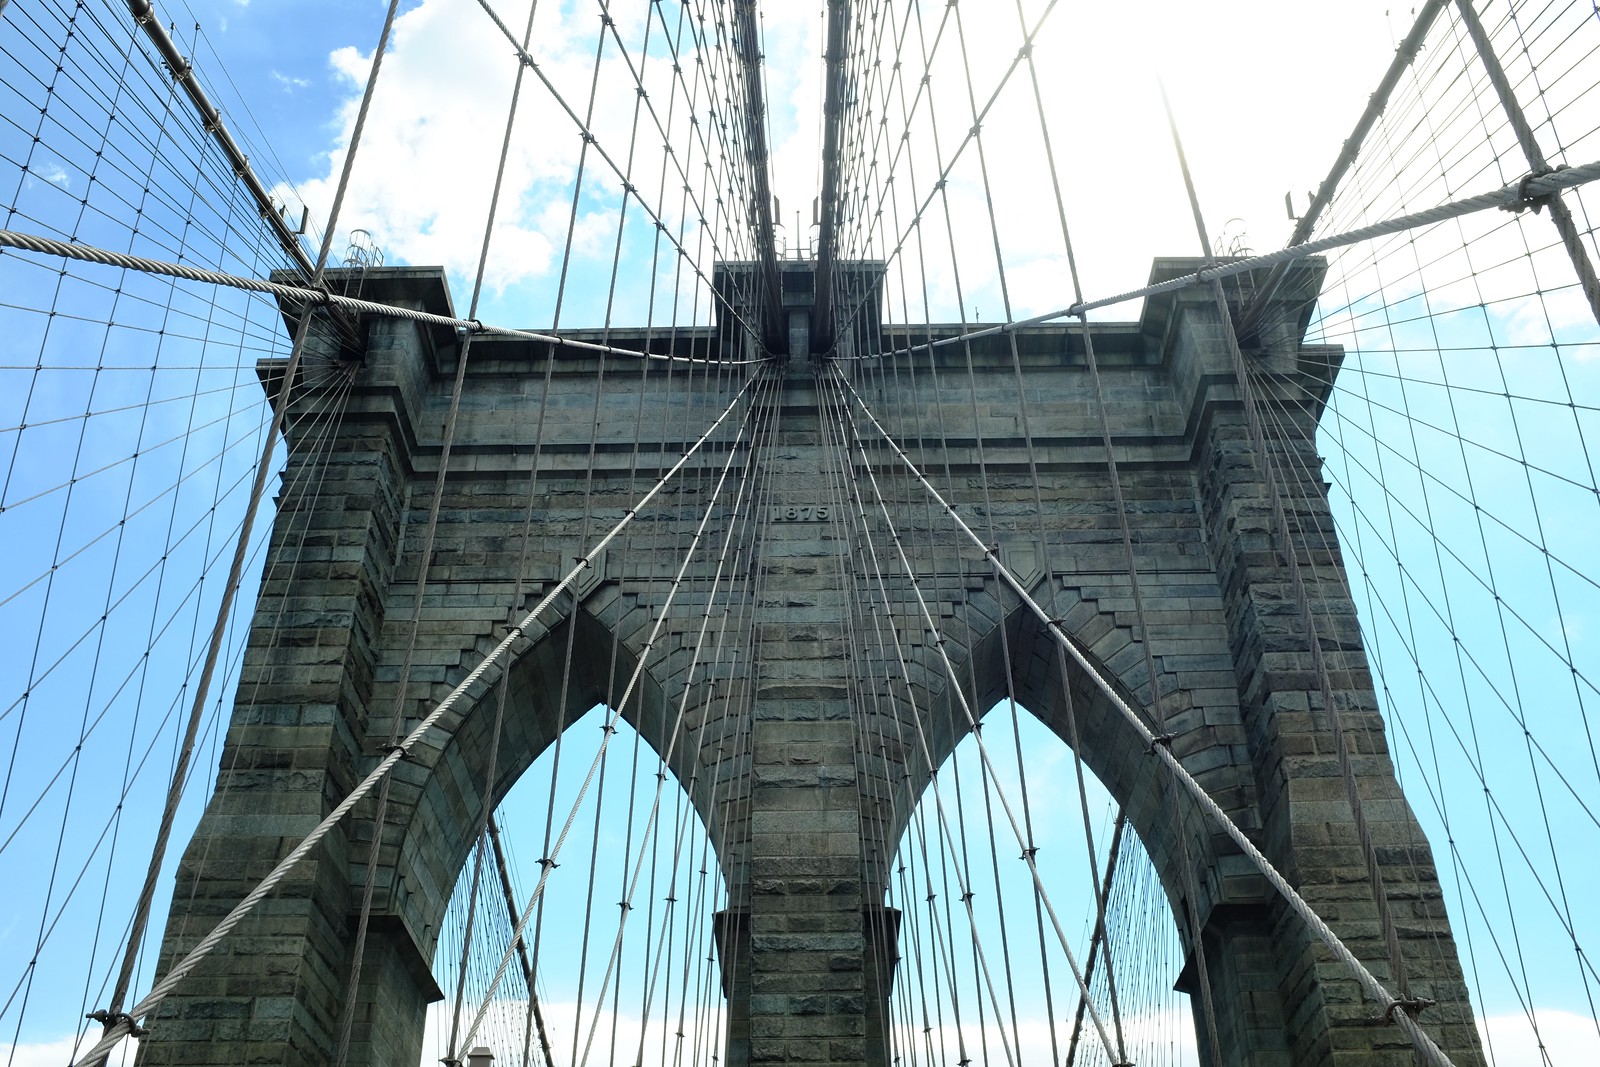 The Brooklyn Bridge by FUJIFILM X100S.